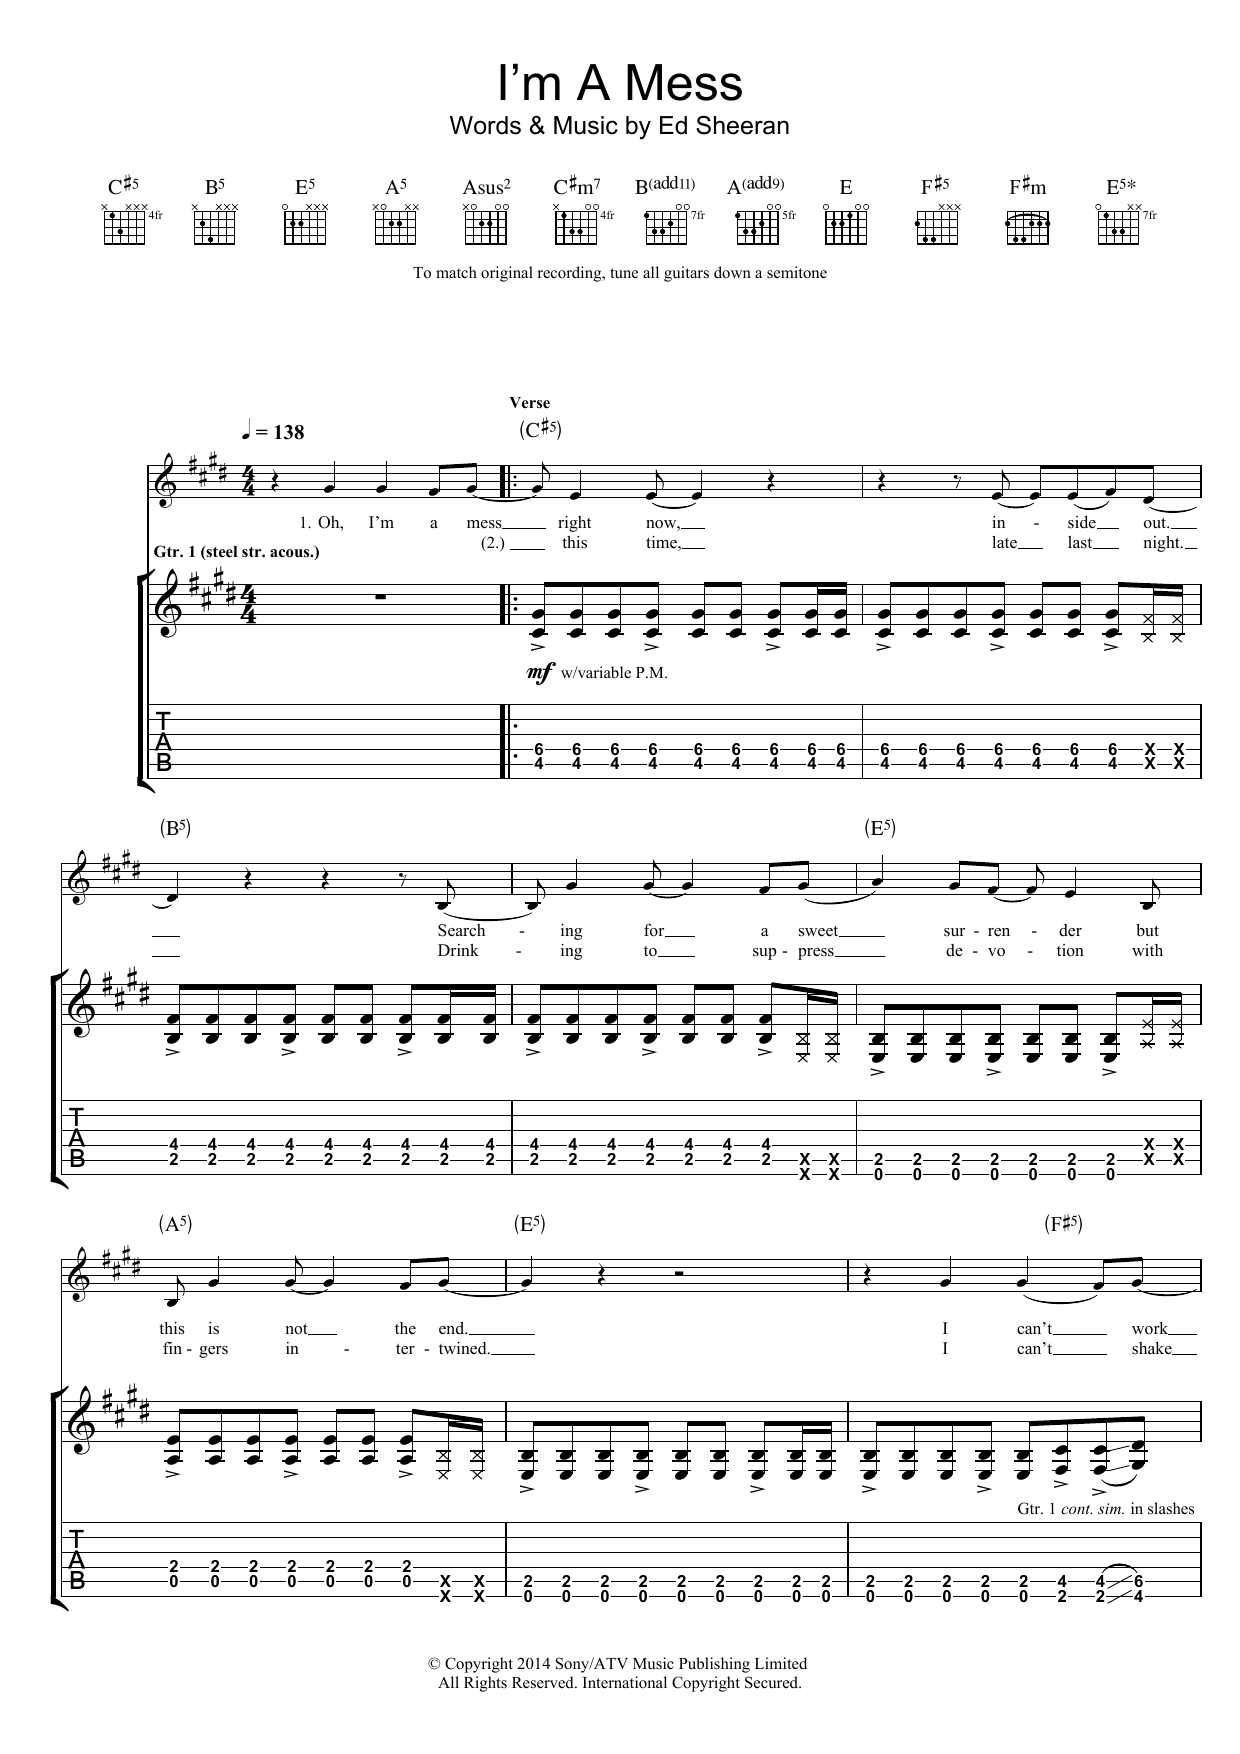 Ed Sheeran I'm A Mess Sheet Music Notes & Chords for Easy Guitar Tab - Download or Print PDF